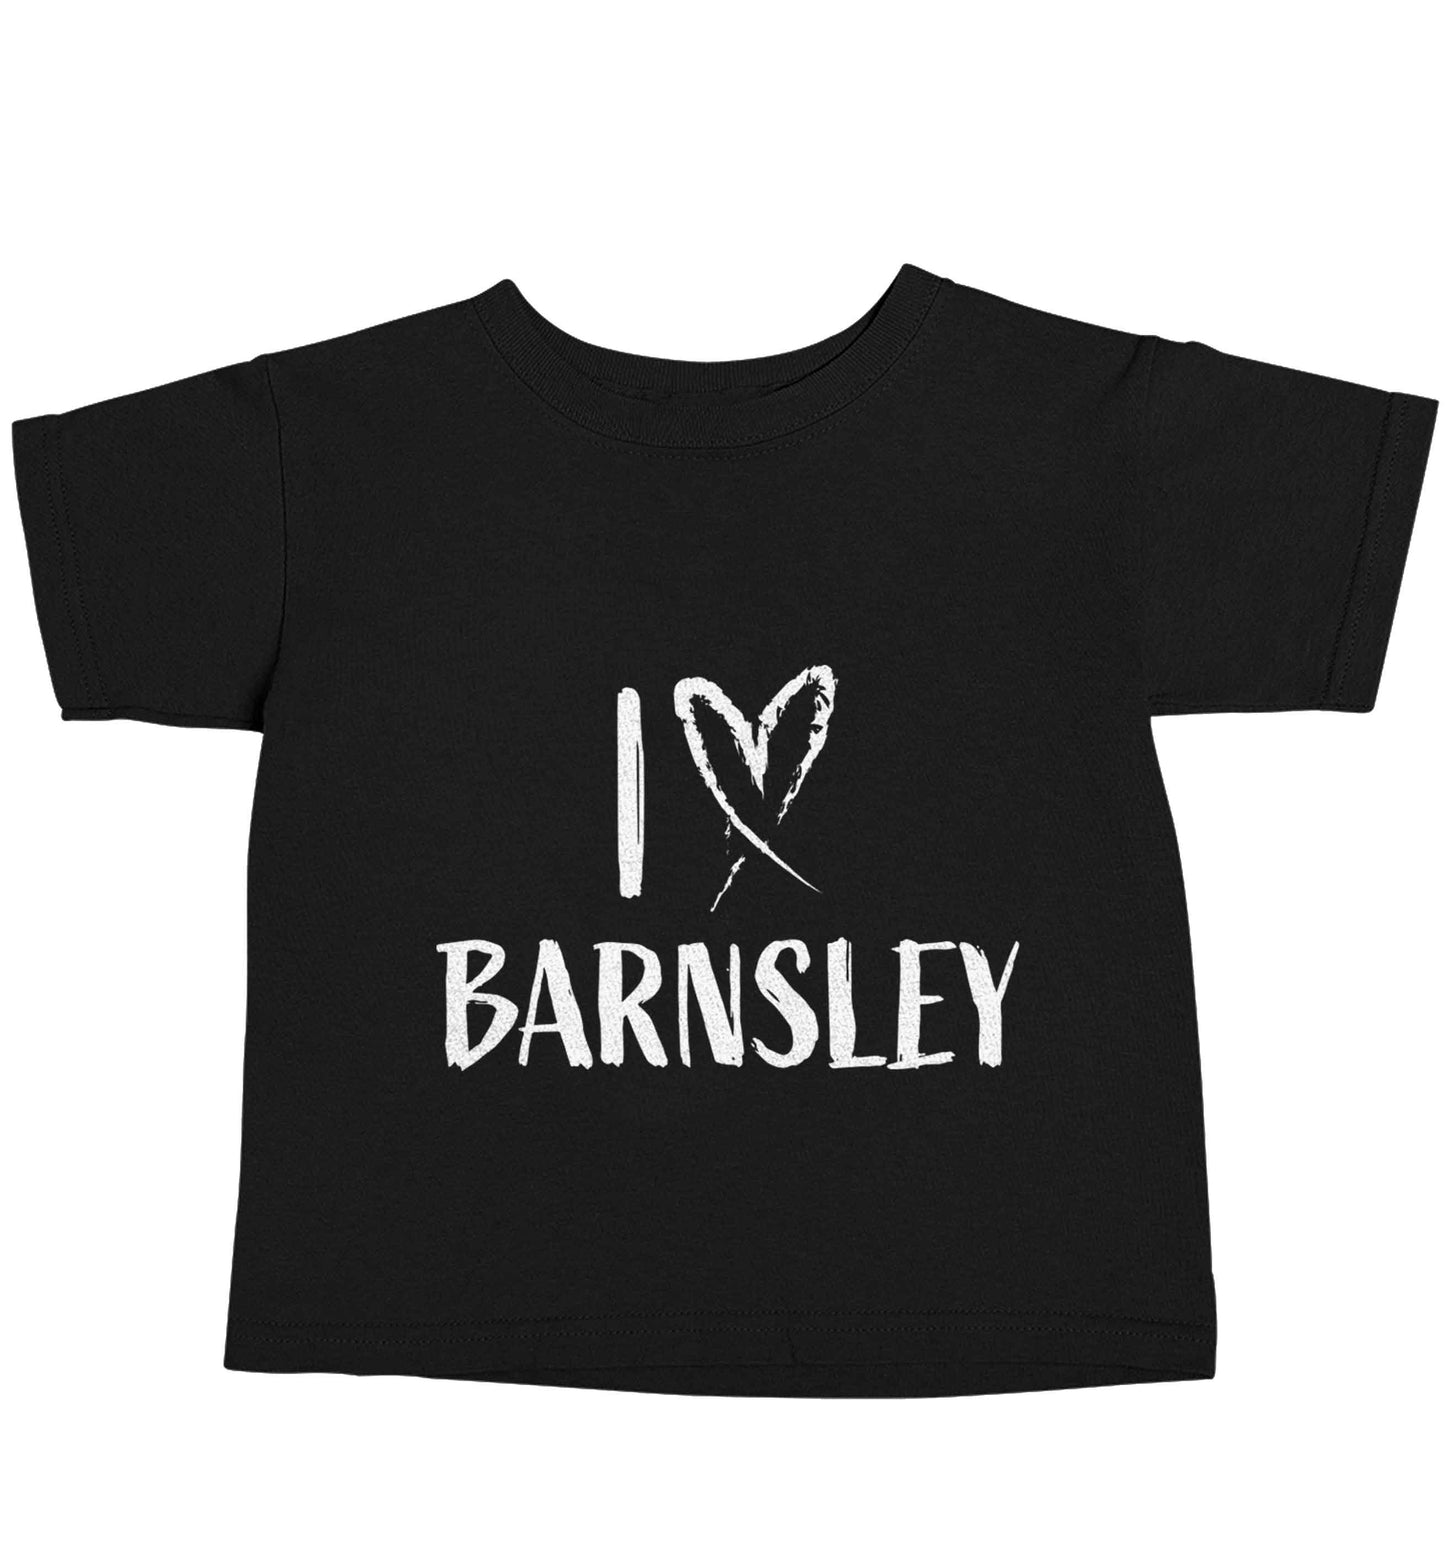 I love Barnsley Black baby toddler Tshirt 2 years